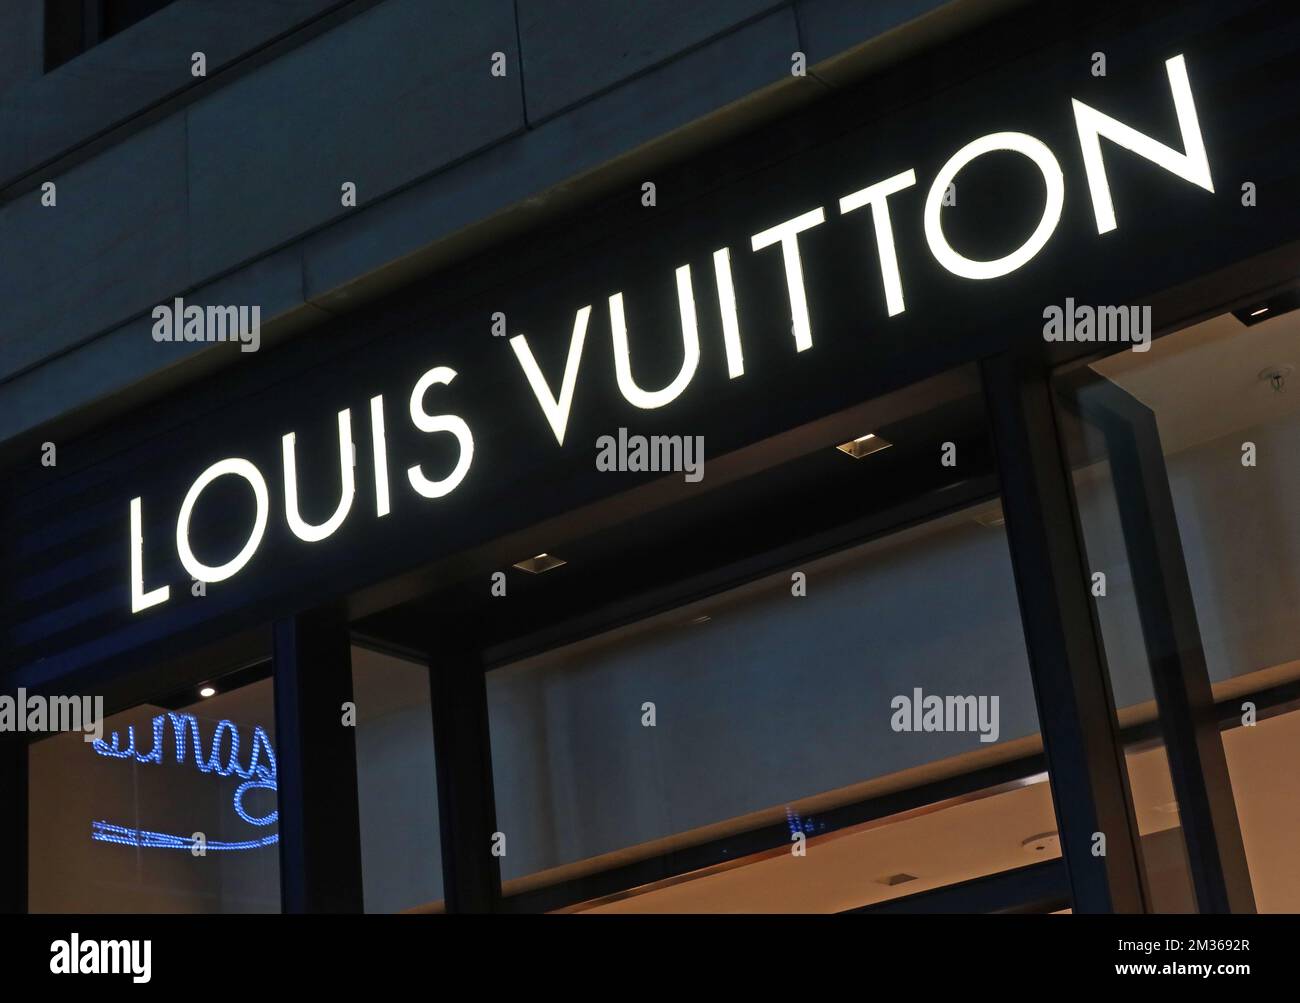 Browsing Louis Vuitton Women's Shoe Section Bloomingdale's LV store :  r/Louisvuitton